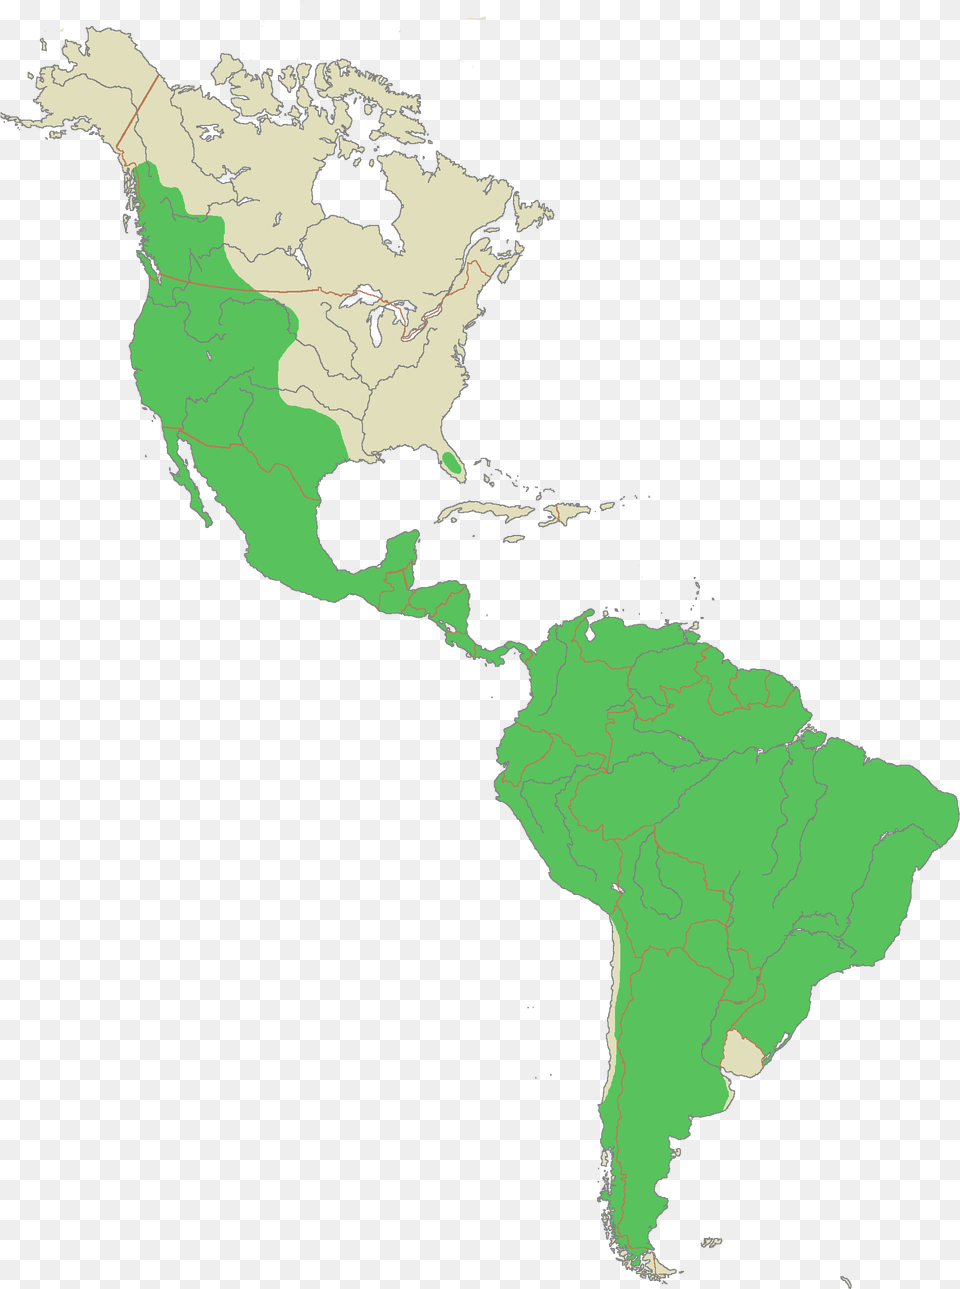 Puma Range Latin America Map Silhouette, Outdoors, Chart, Plot, Nature Free Transparent Png